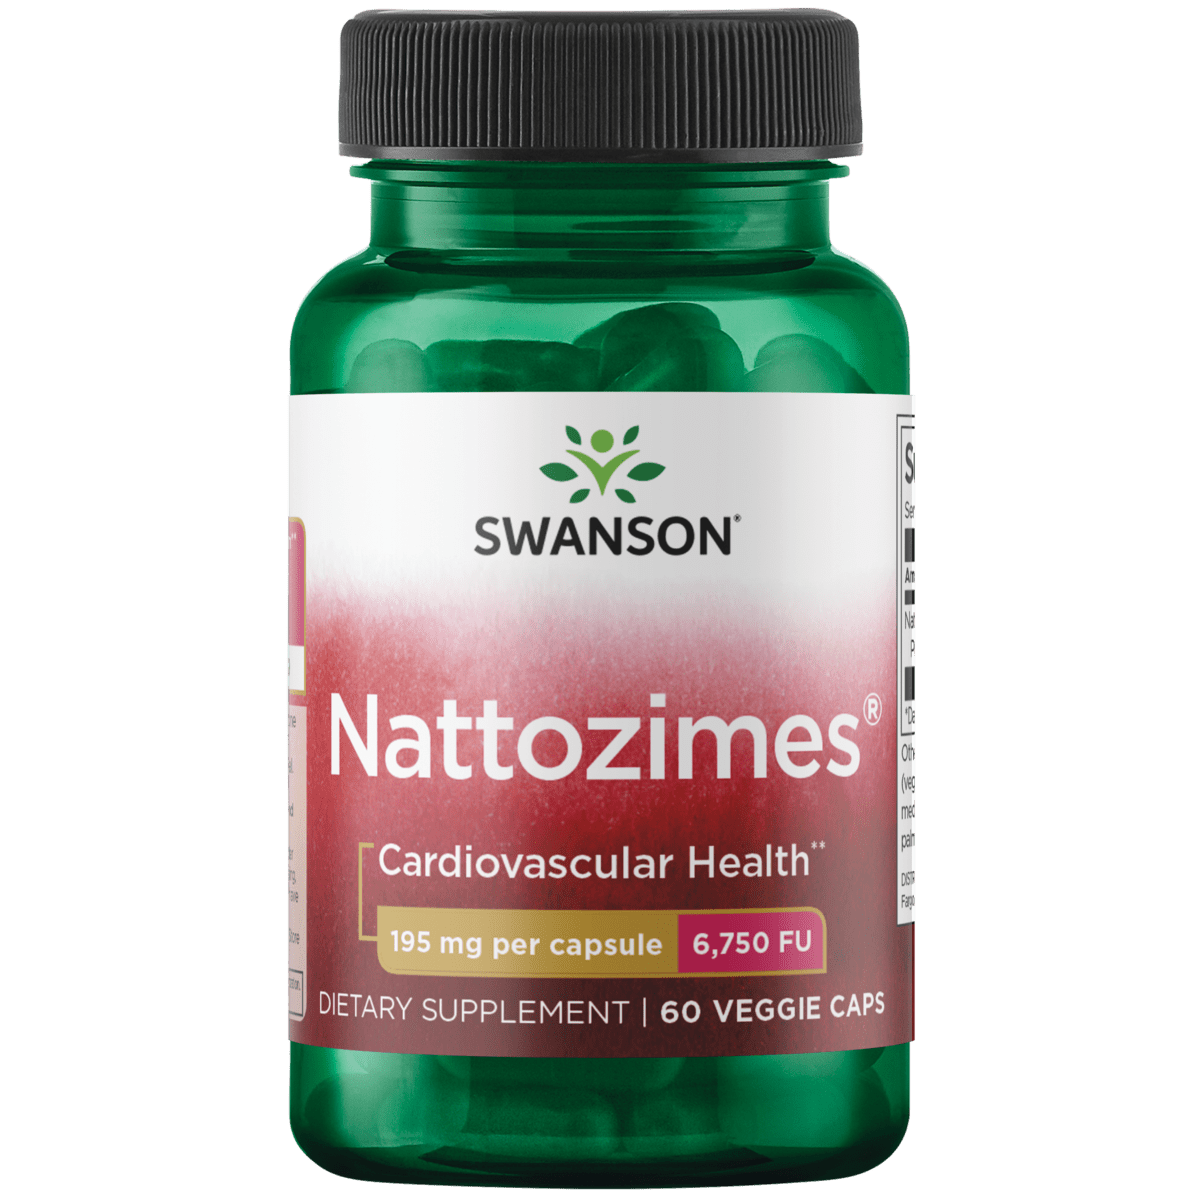 Swanson Nattozimes 195mg (6,750 FU) | healthy.co.nz